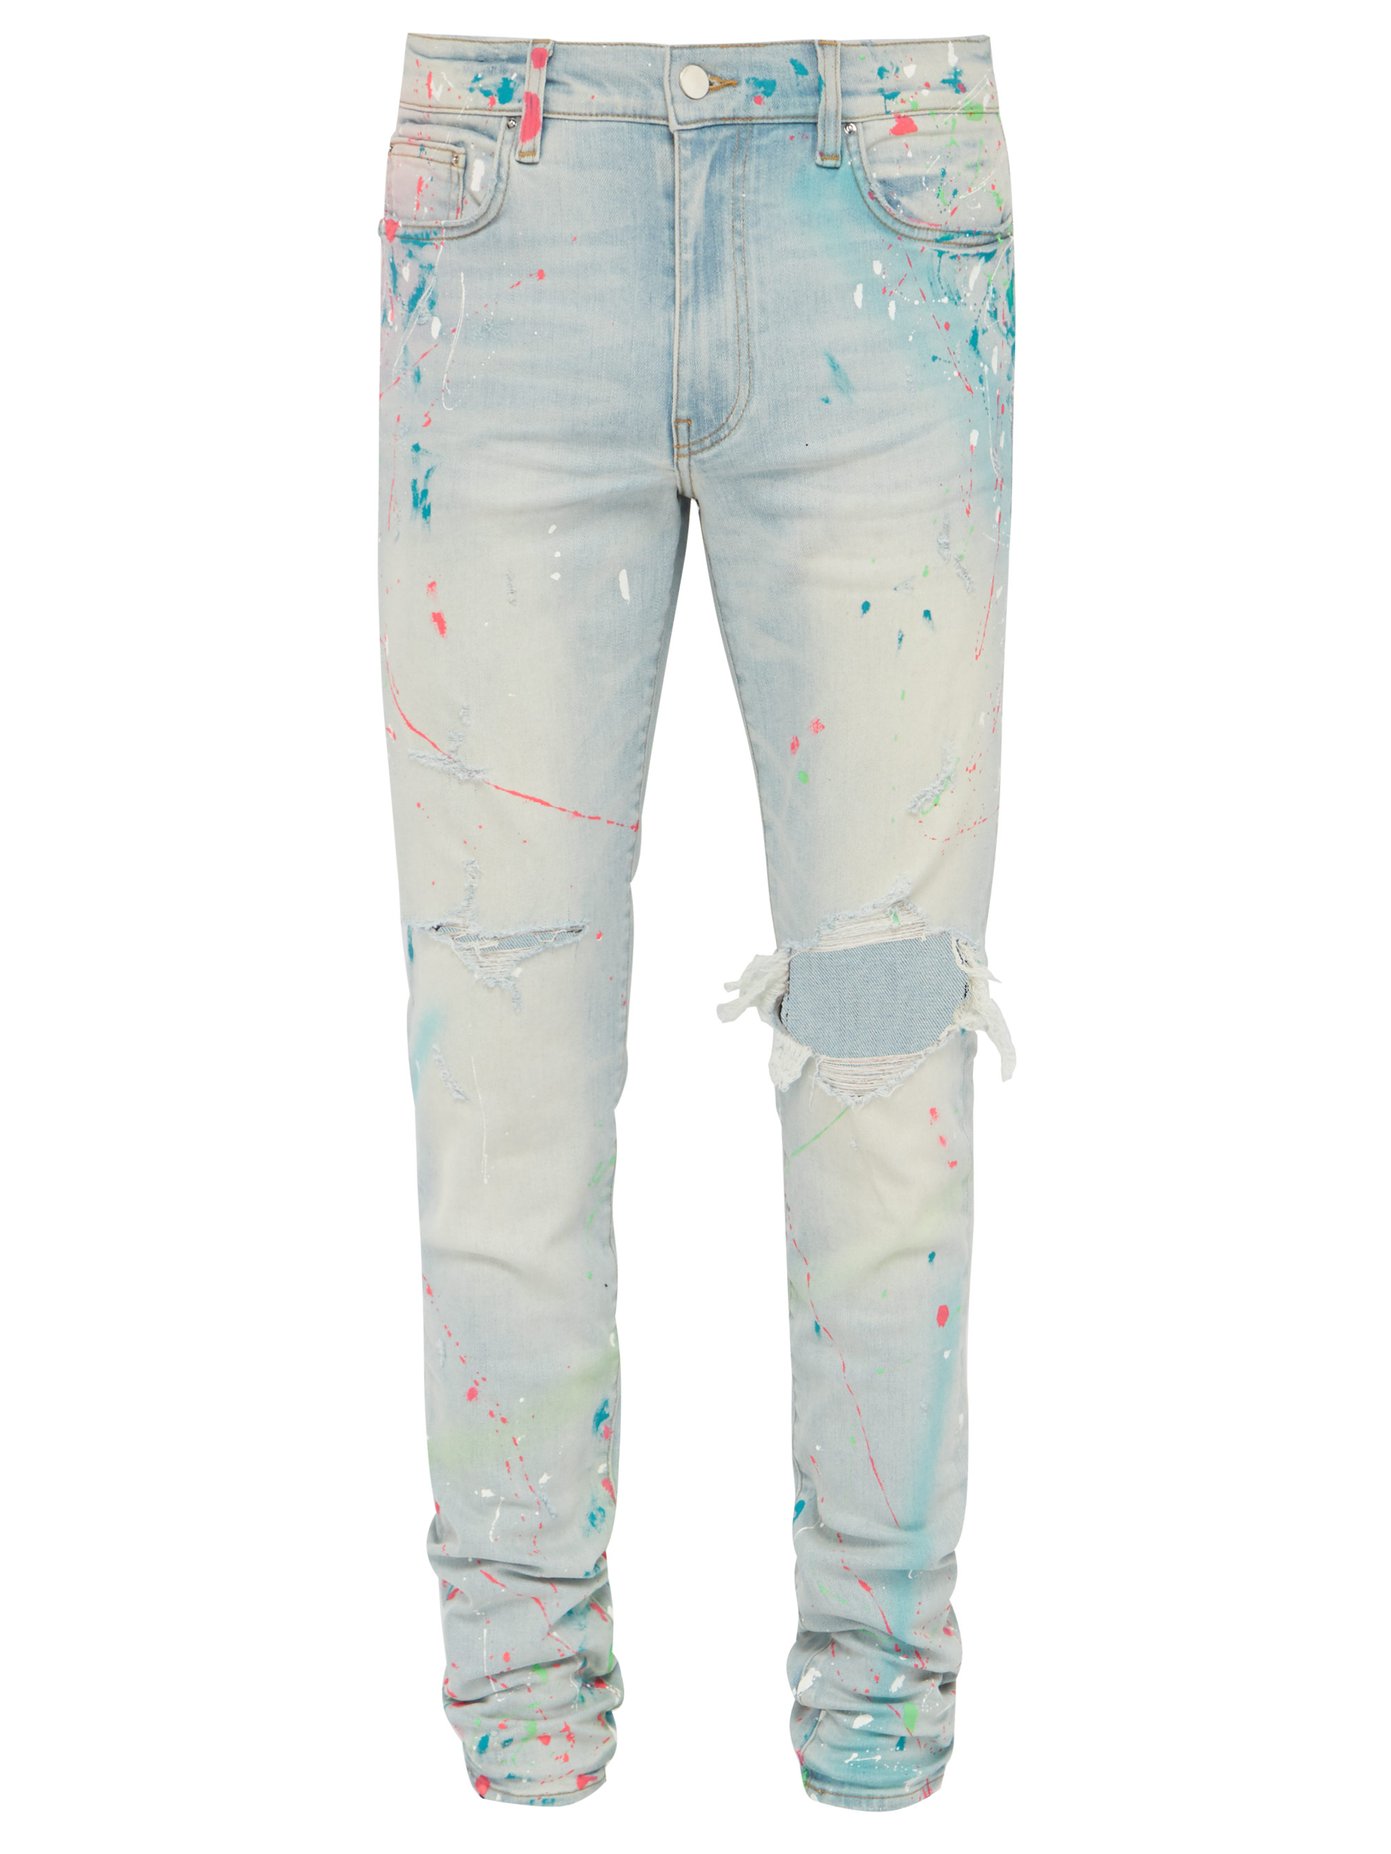 amiri graffiti jeans